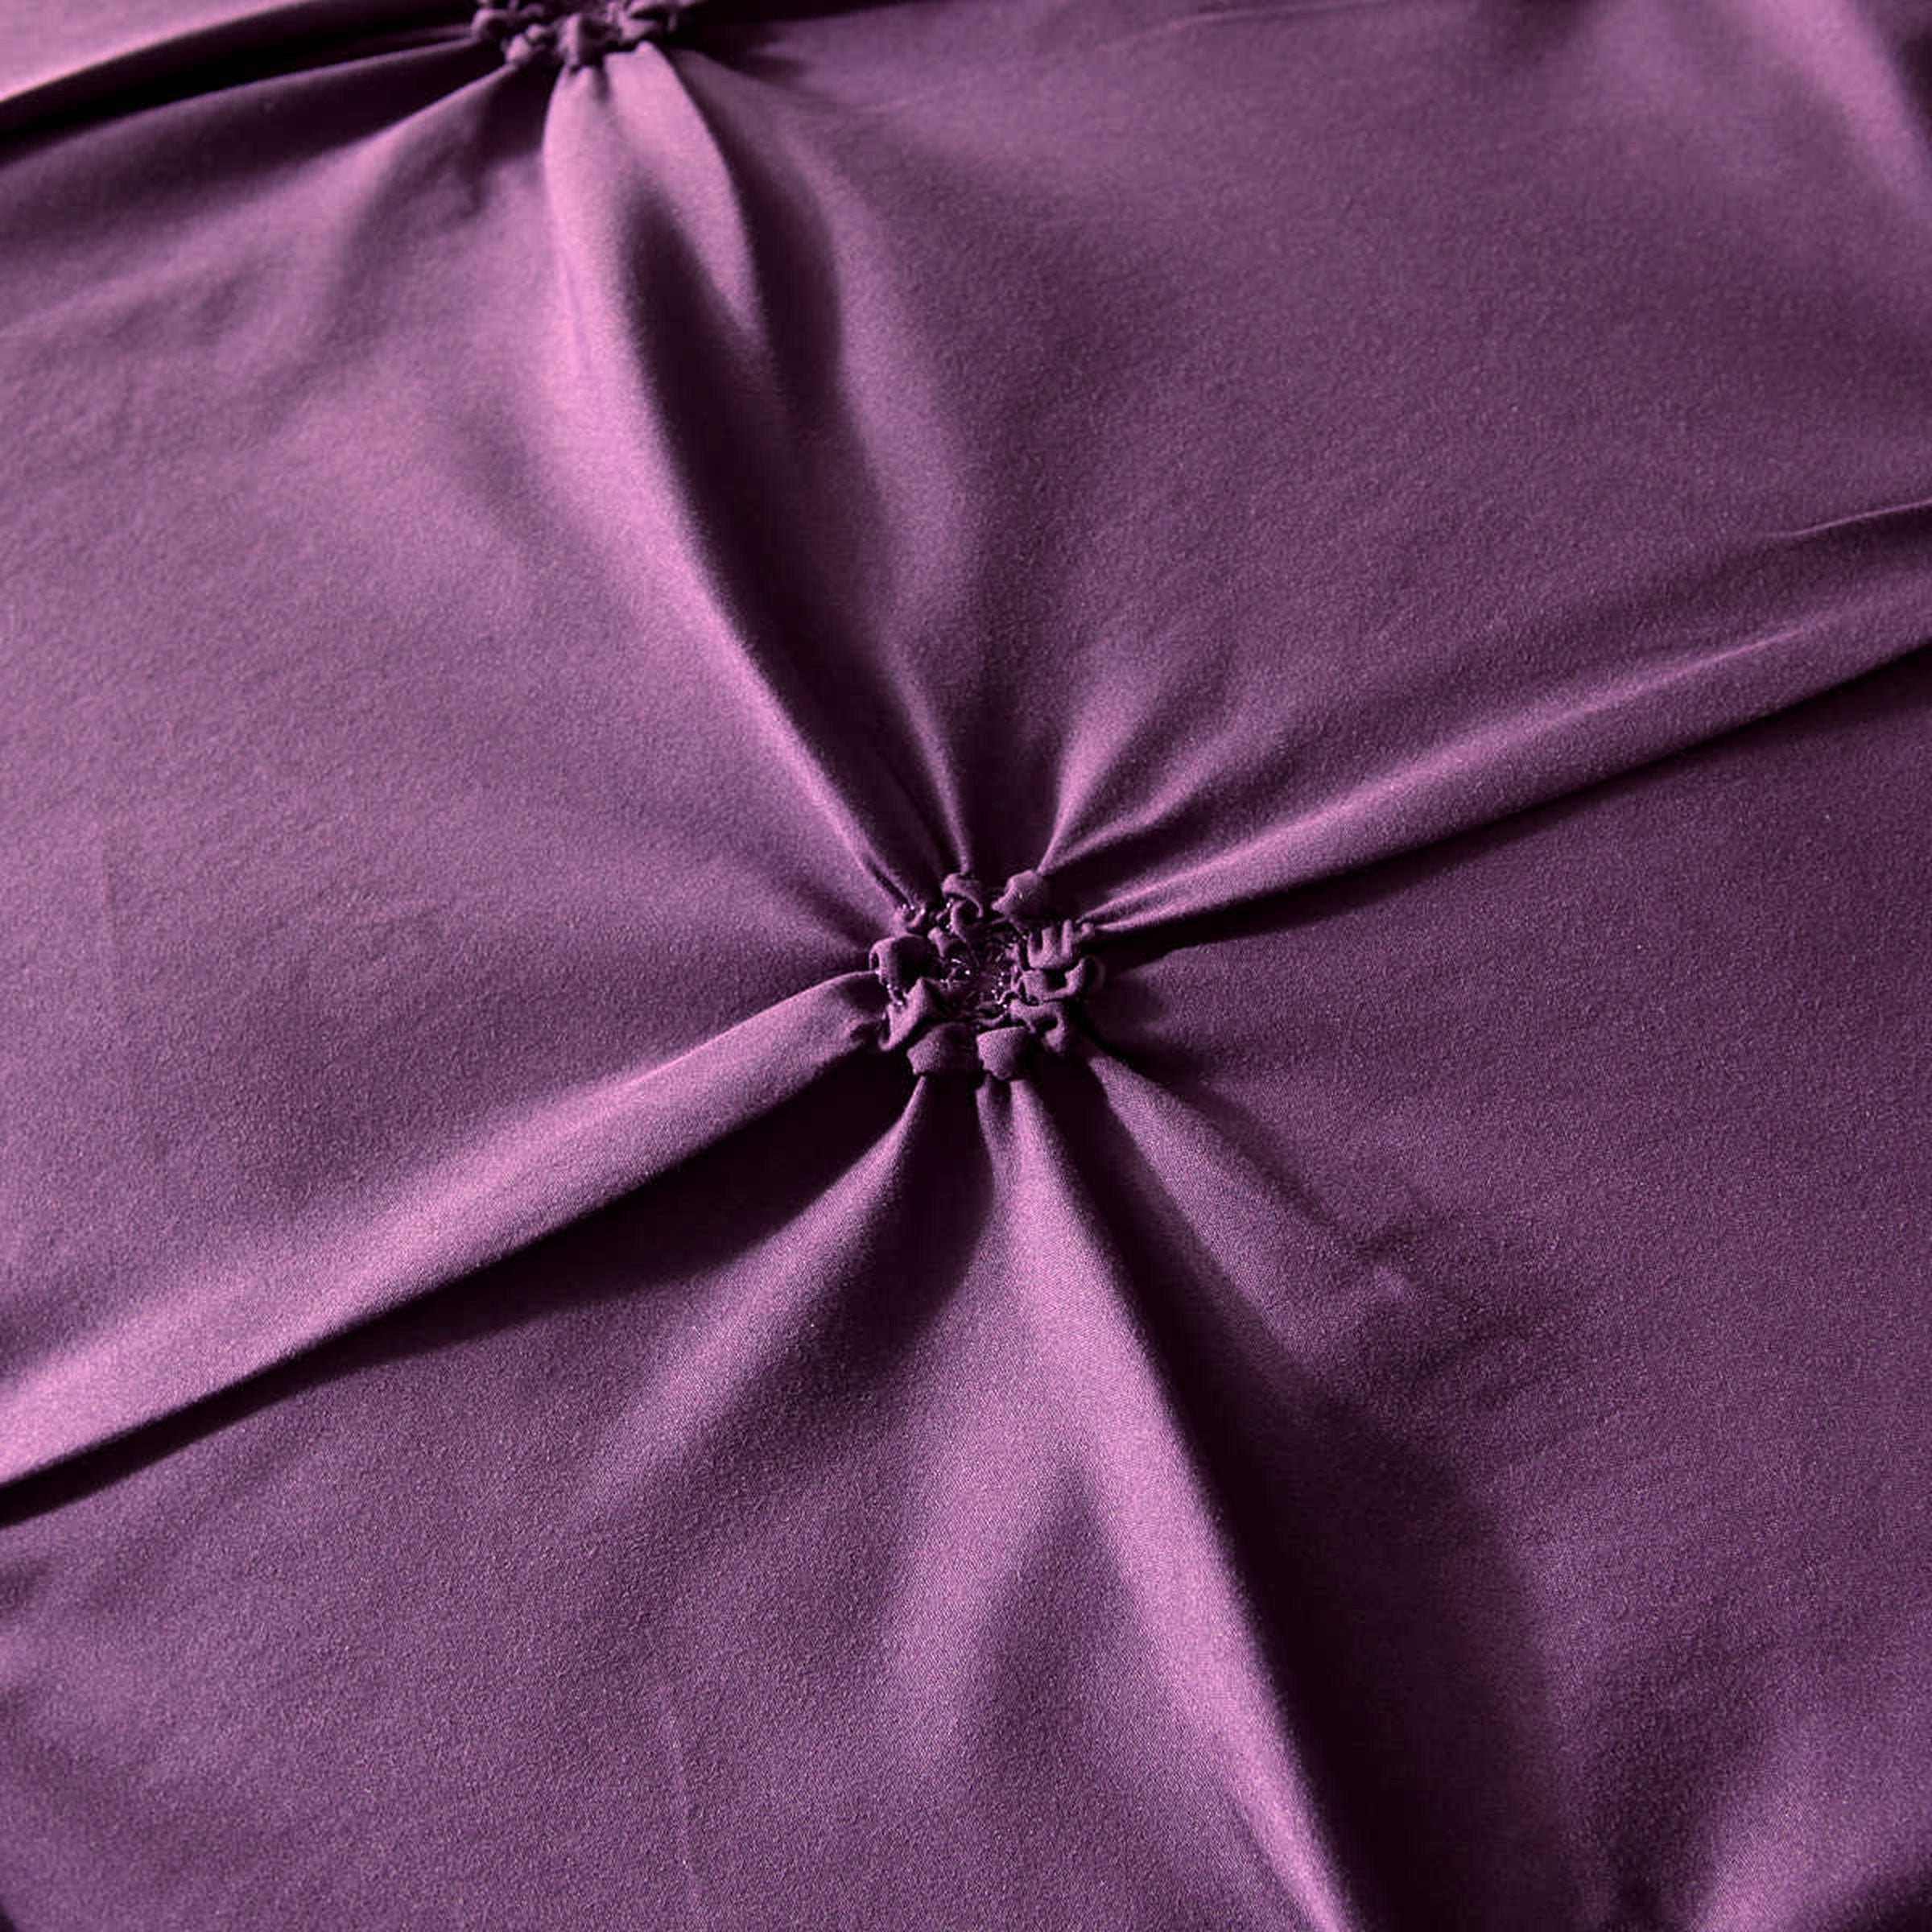 daintyduvet Purple Pintuck Bedding, Pinch Pleat Duvet Cover Set, Shabby Chic Bedding, Tufted Bed Cover, Luxury Aesthetic Duvet King Queen, Boho